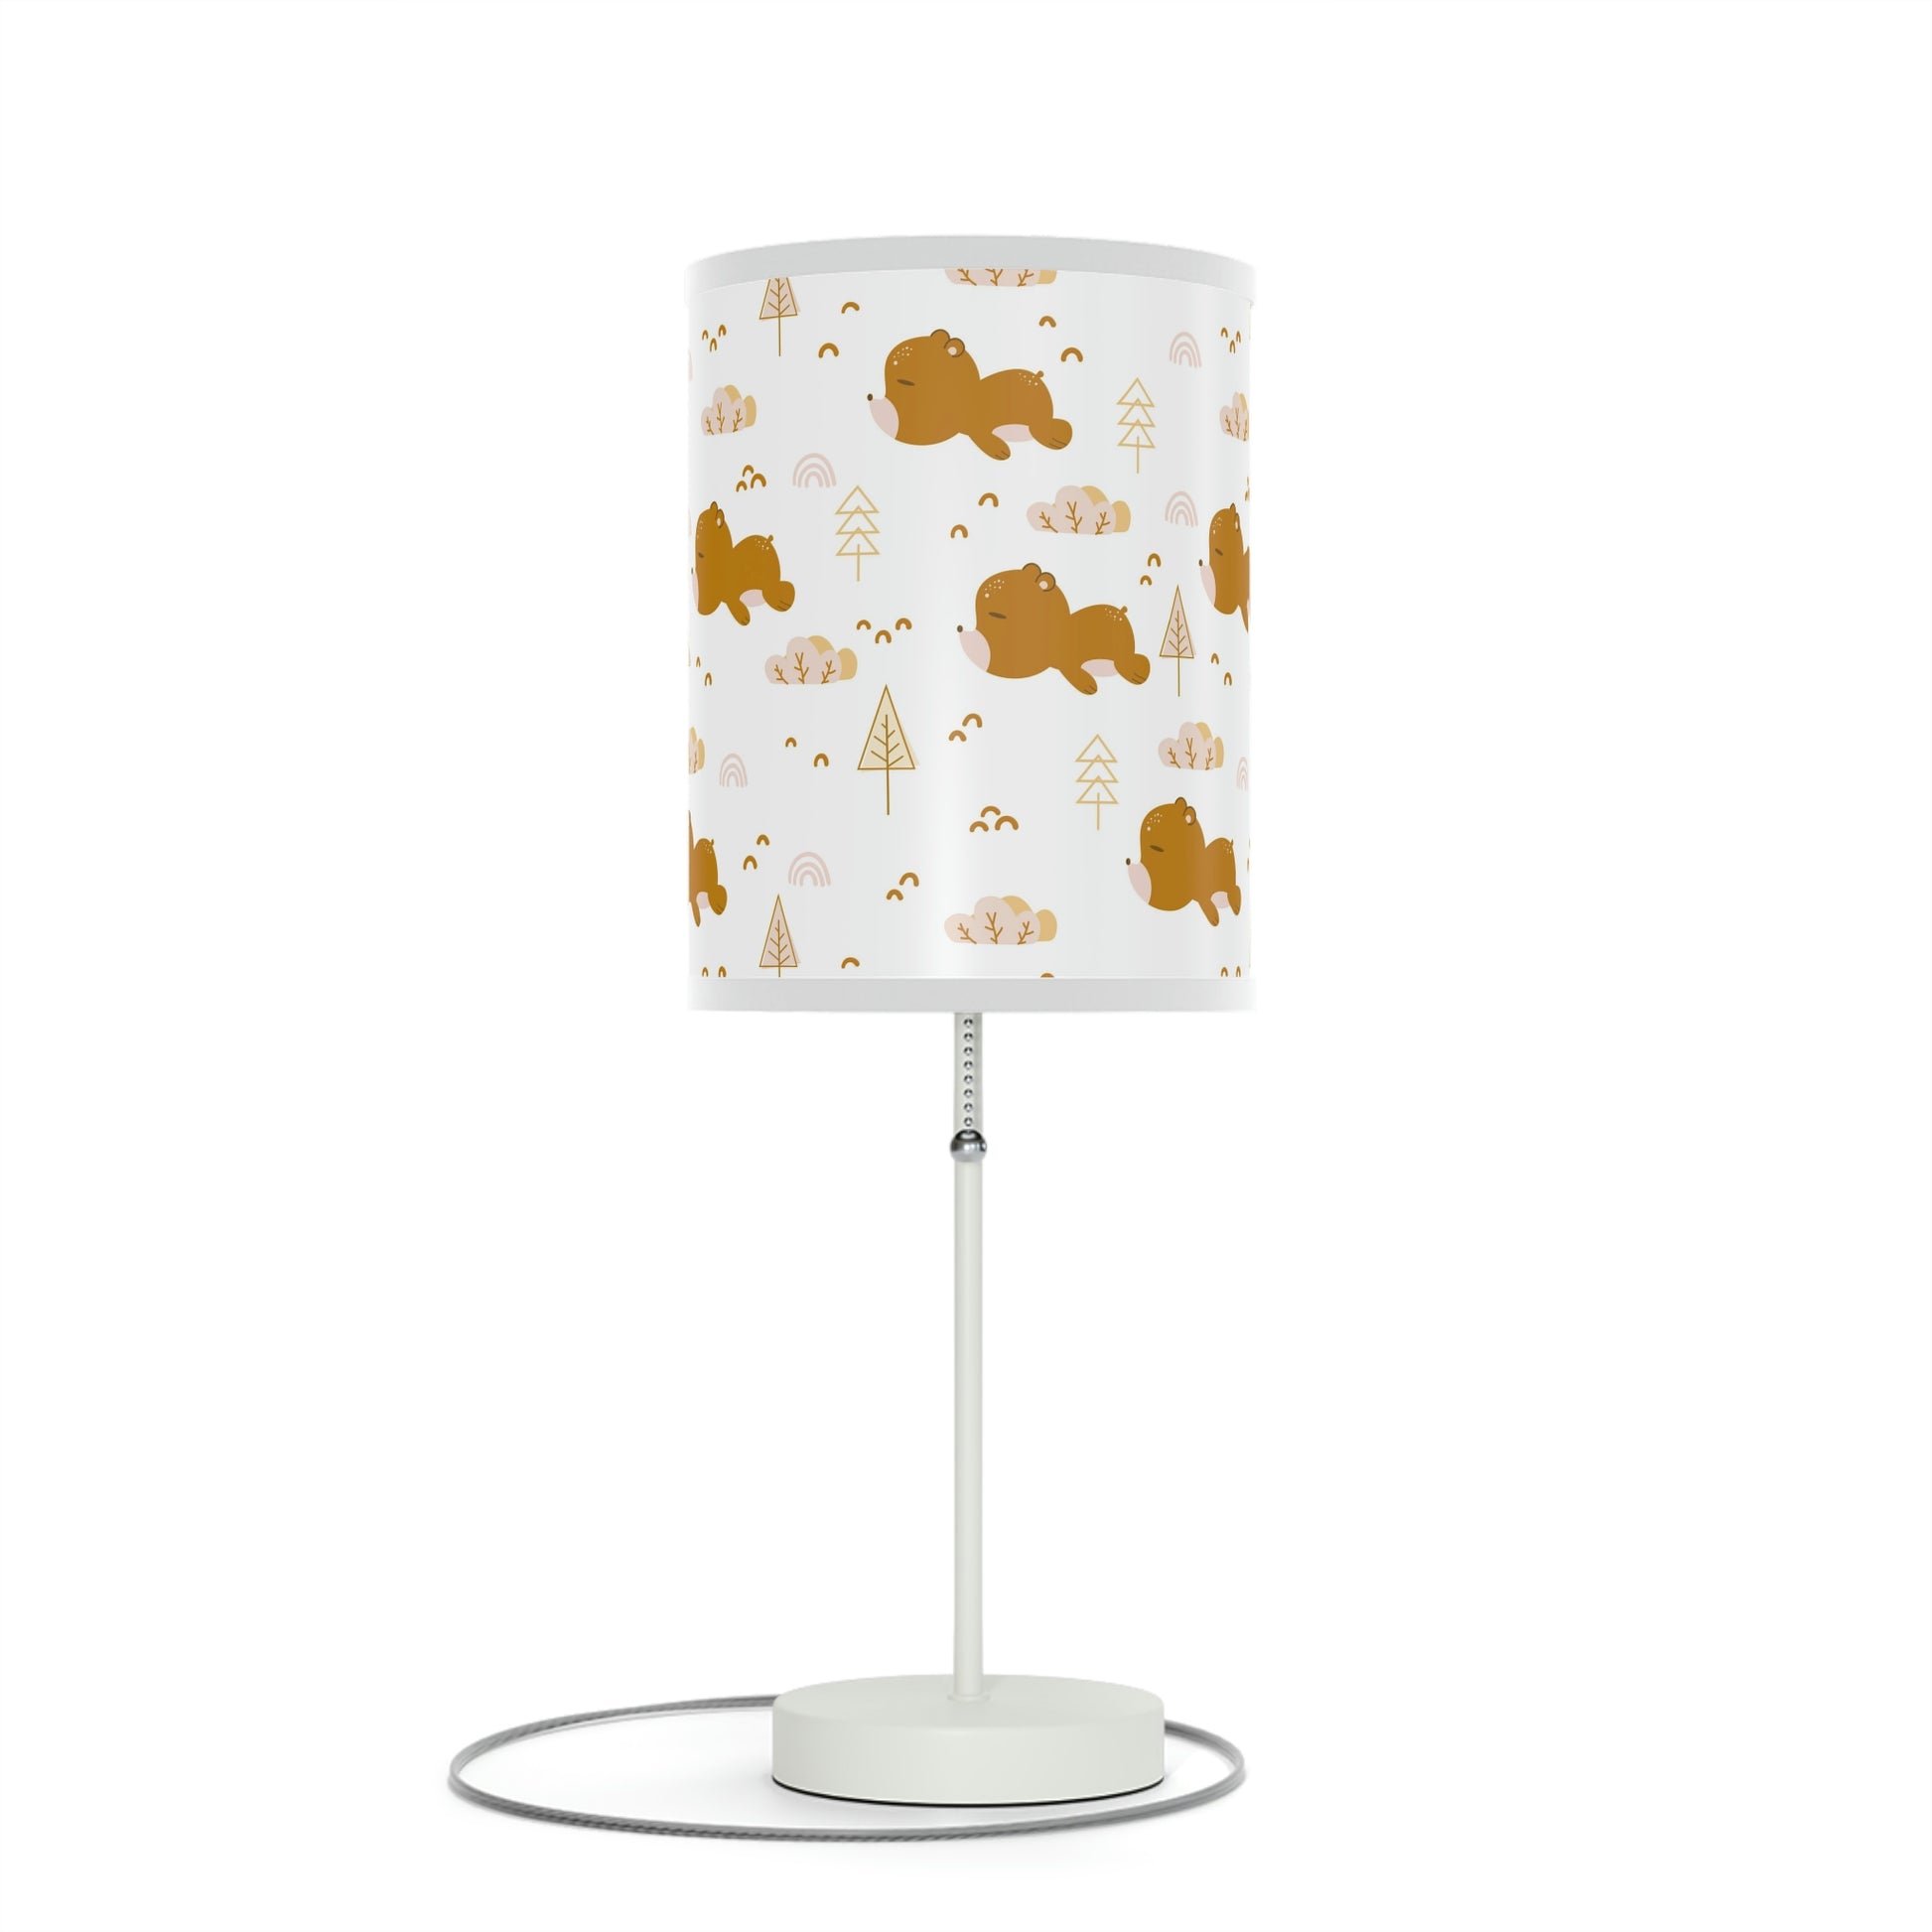 sleepy bear nursery table lamp, sleepy bear baby nursery lamp